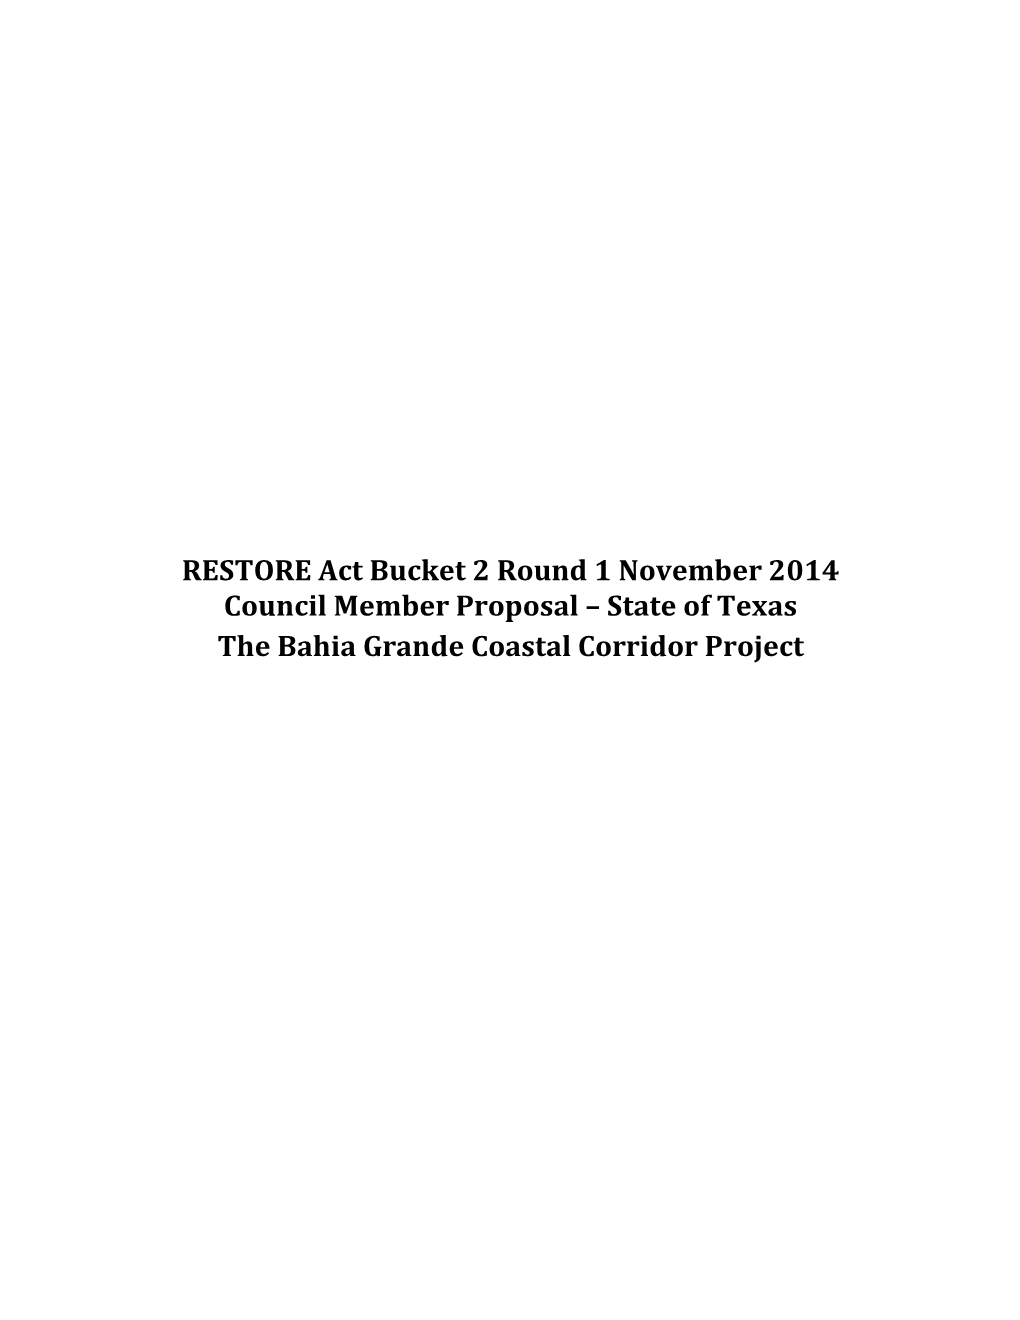 State of Texas the Bahia Grande Coastal Corridor Project